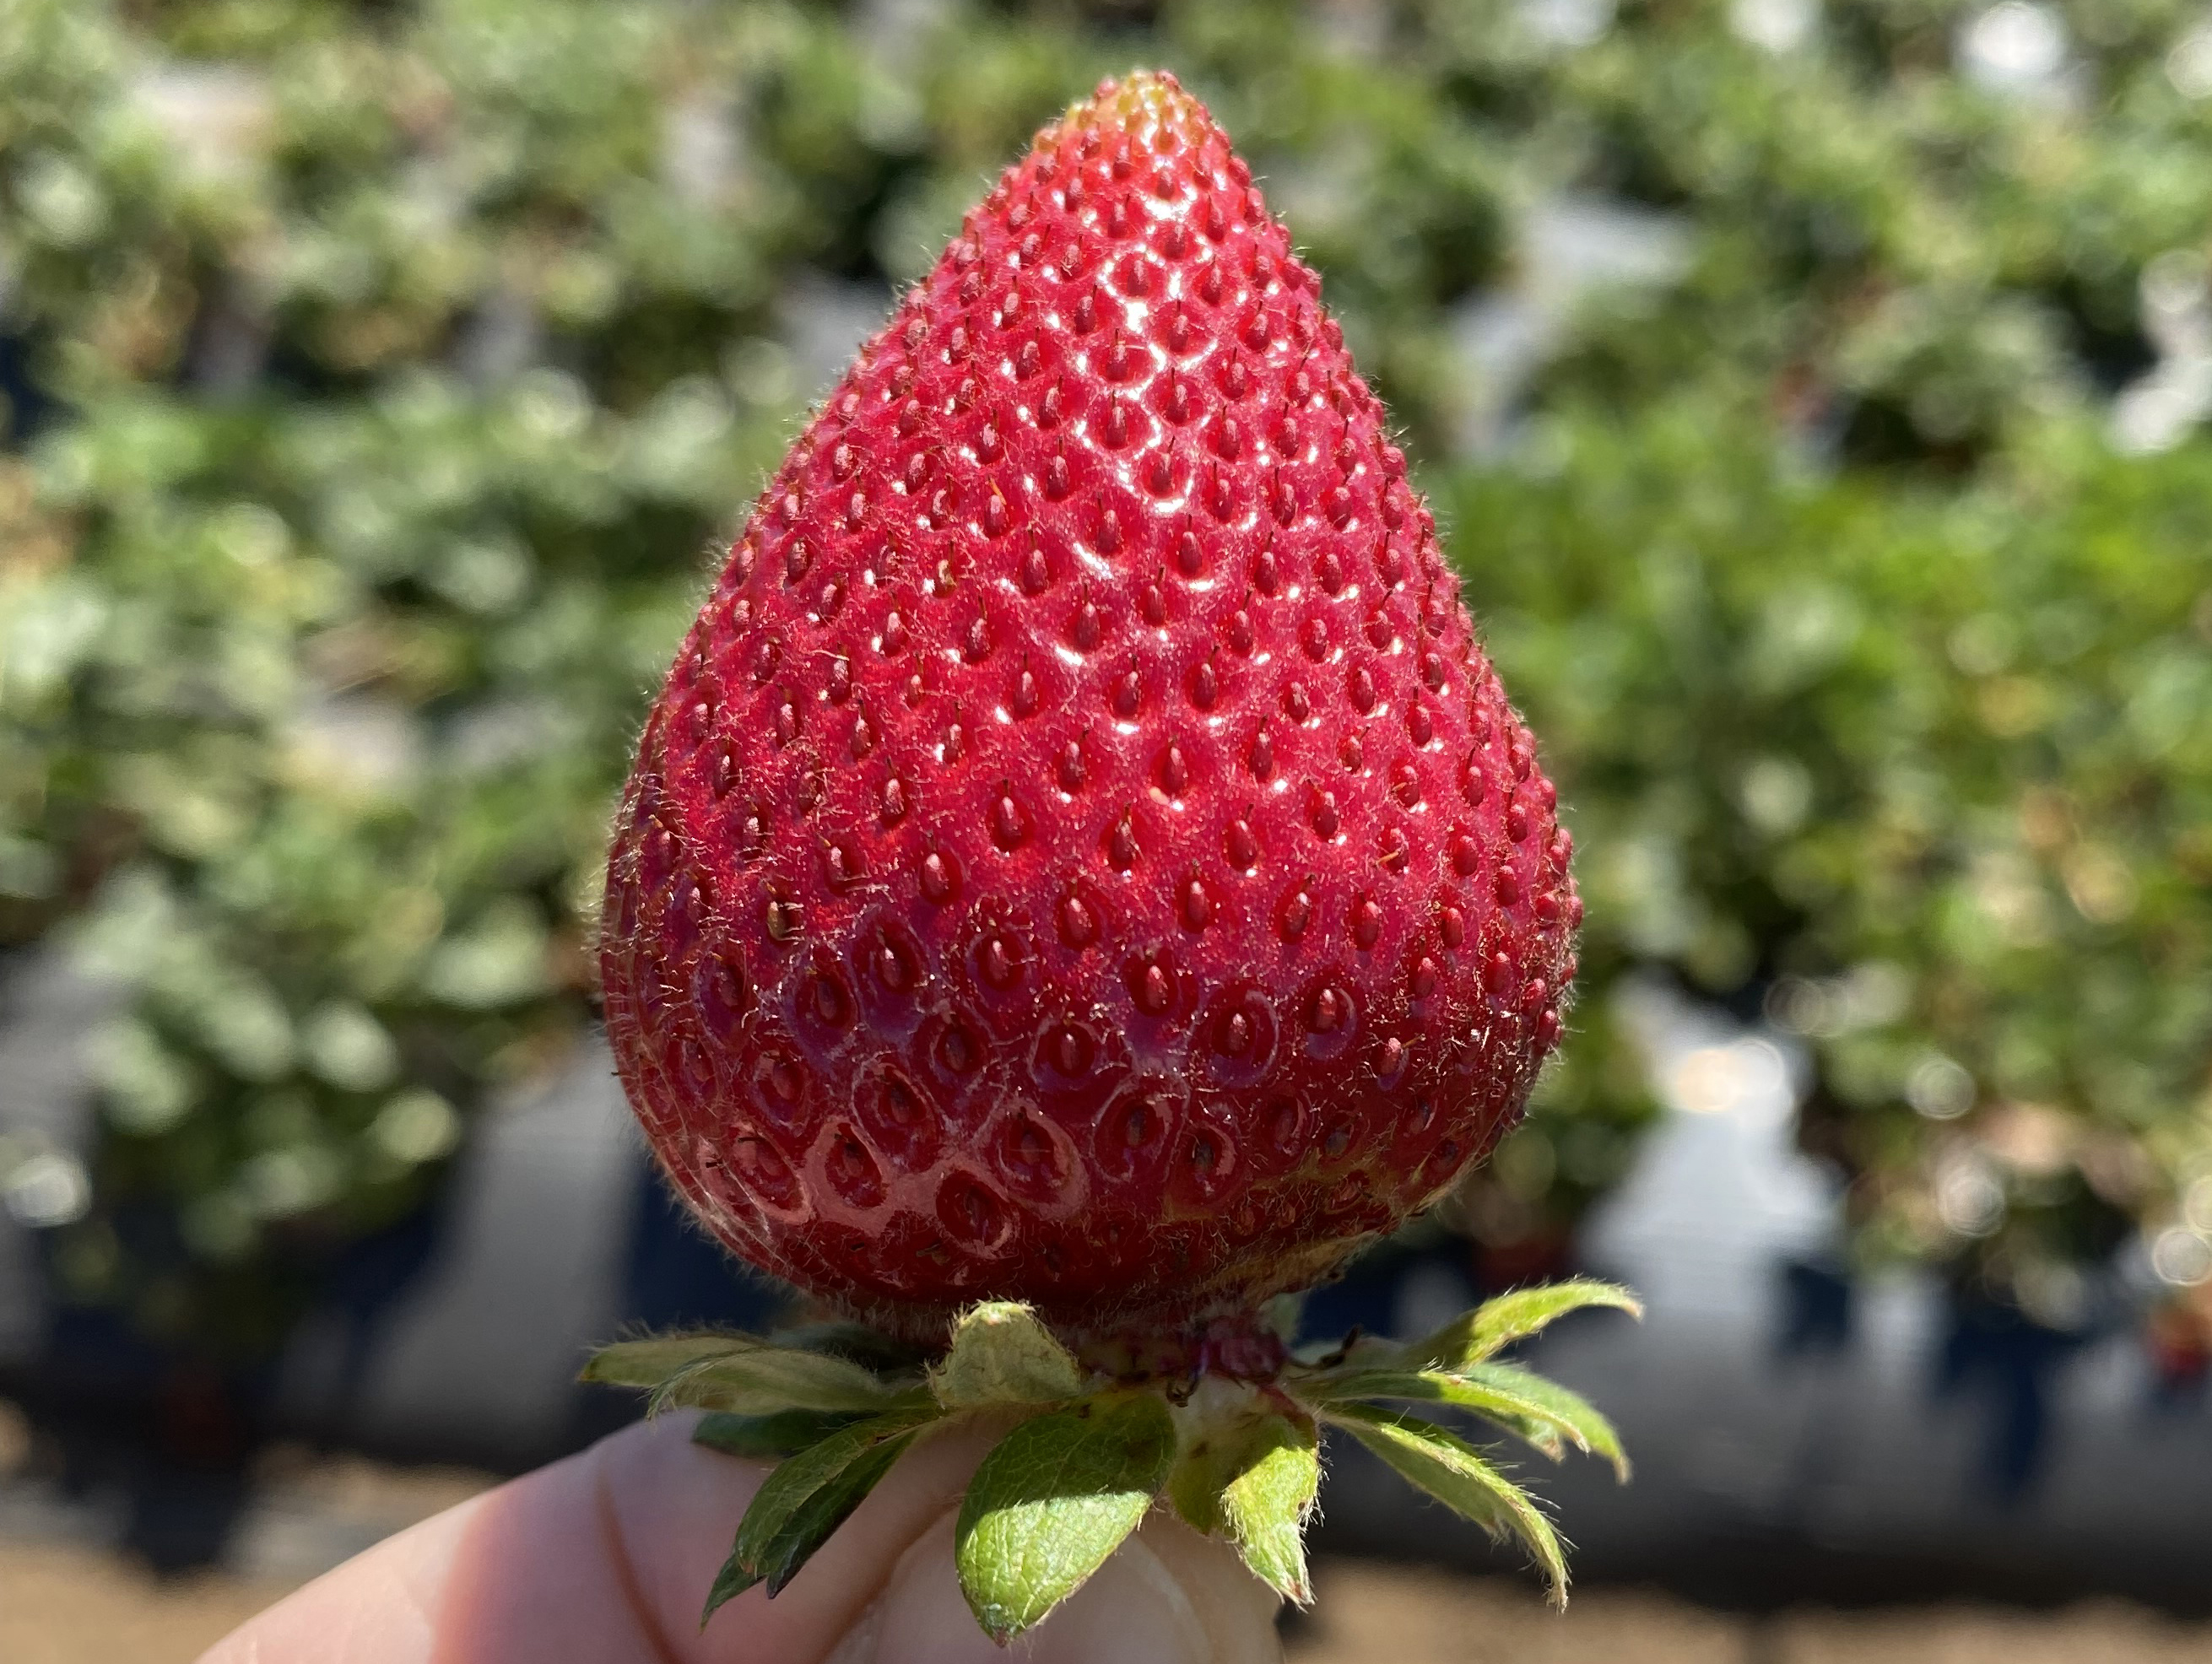 Strawberry close-up.